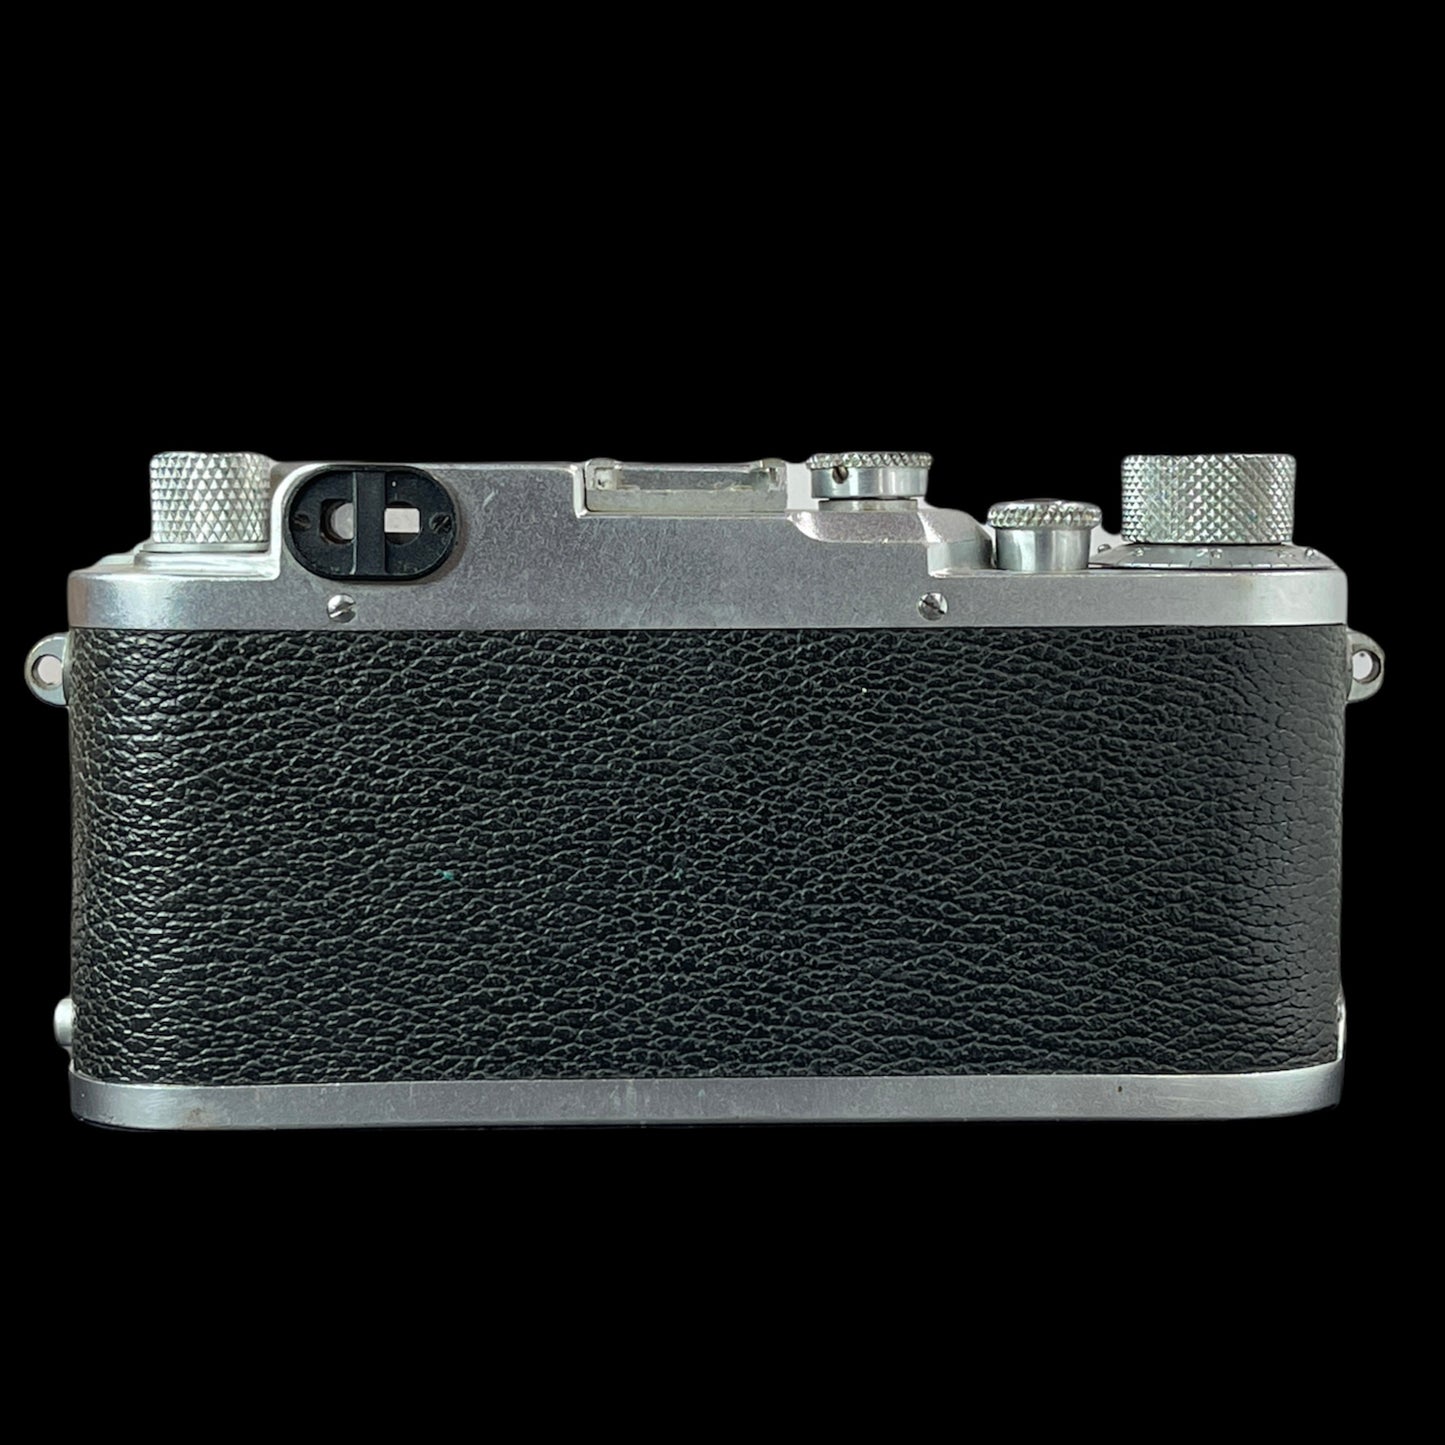 Leica IIIc B#418599